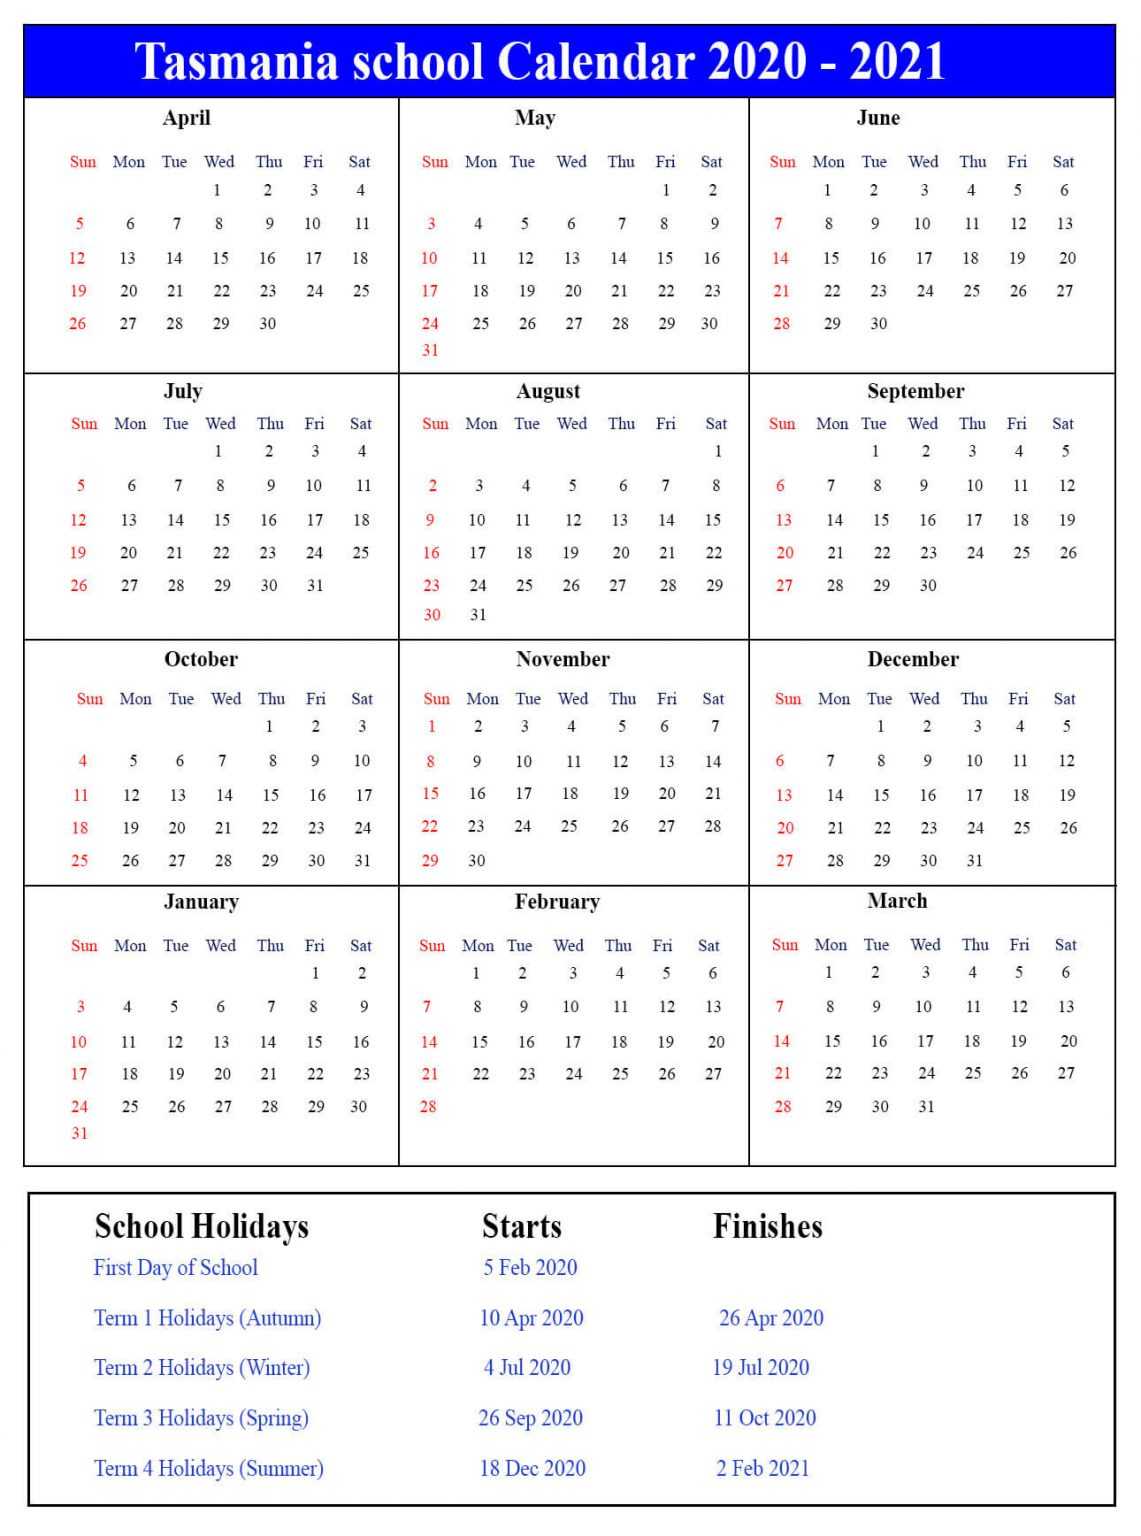 Free Printable Tasmania School Holidays 2020- 21 Calendar